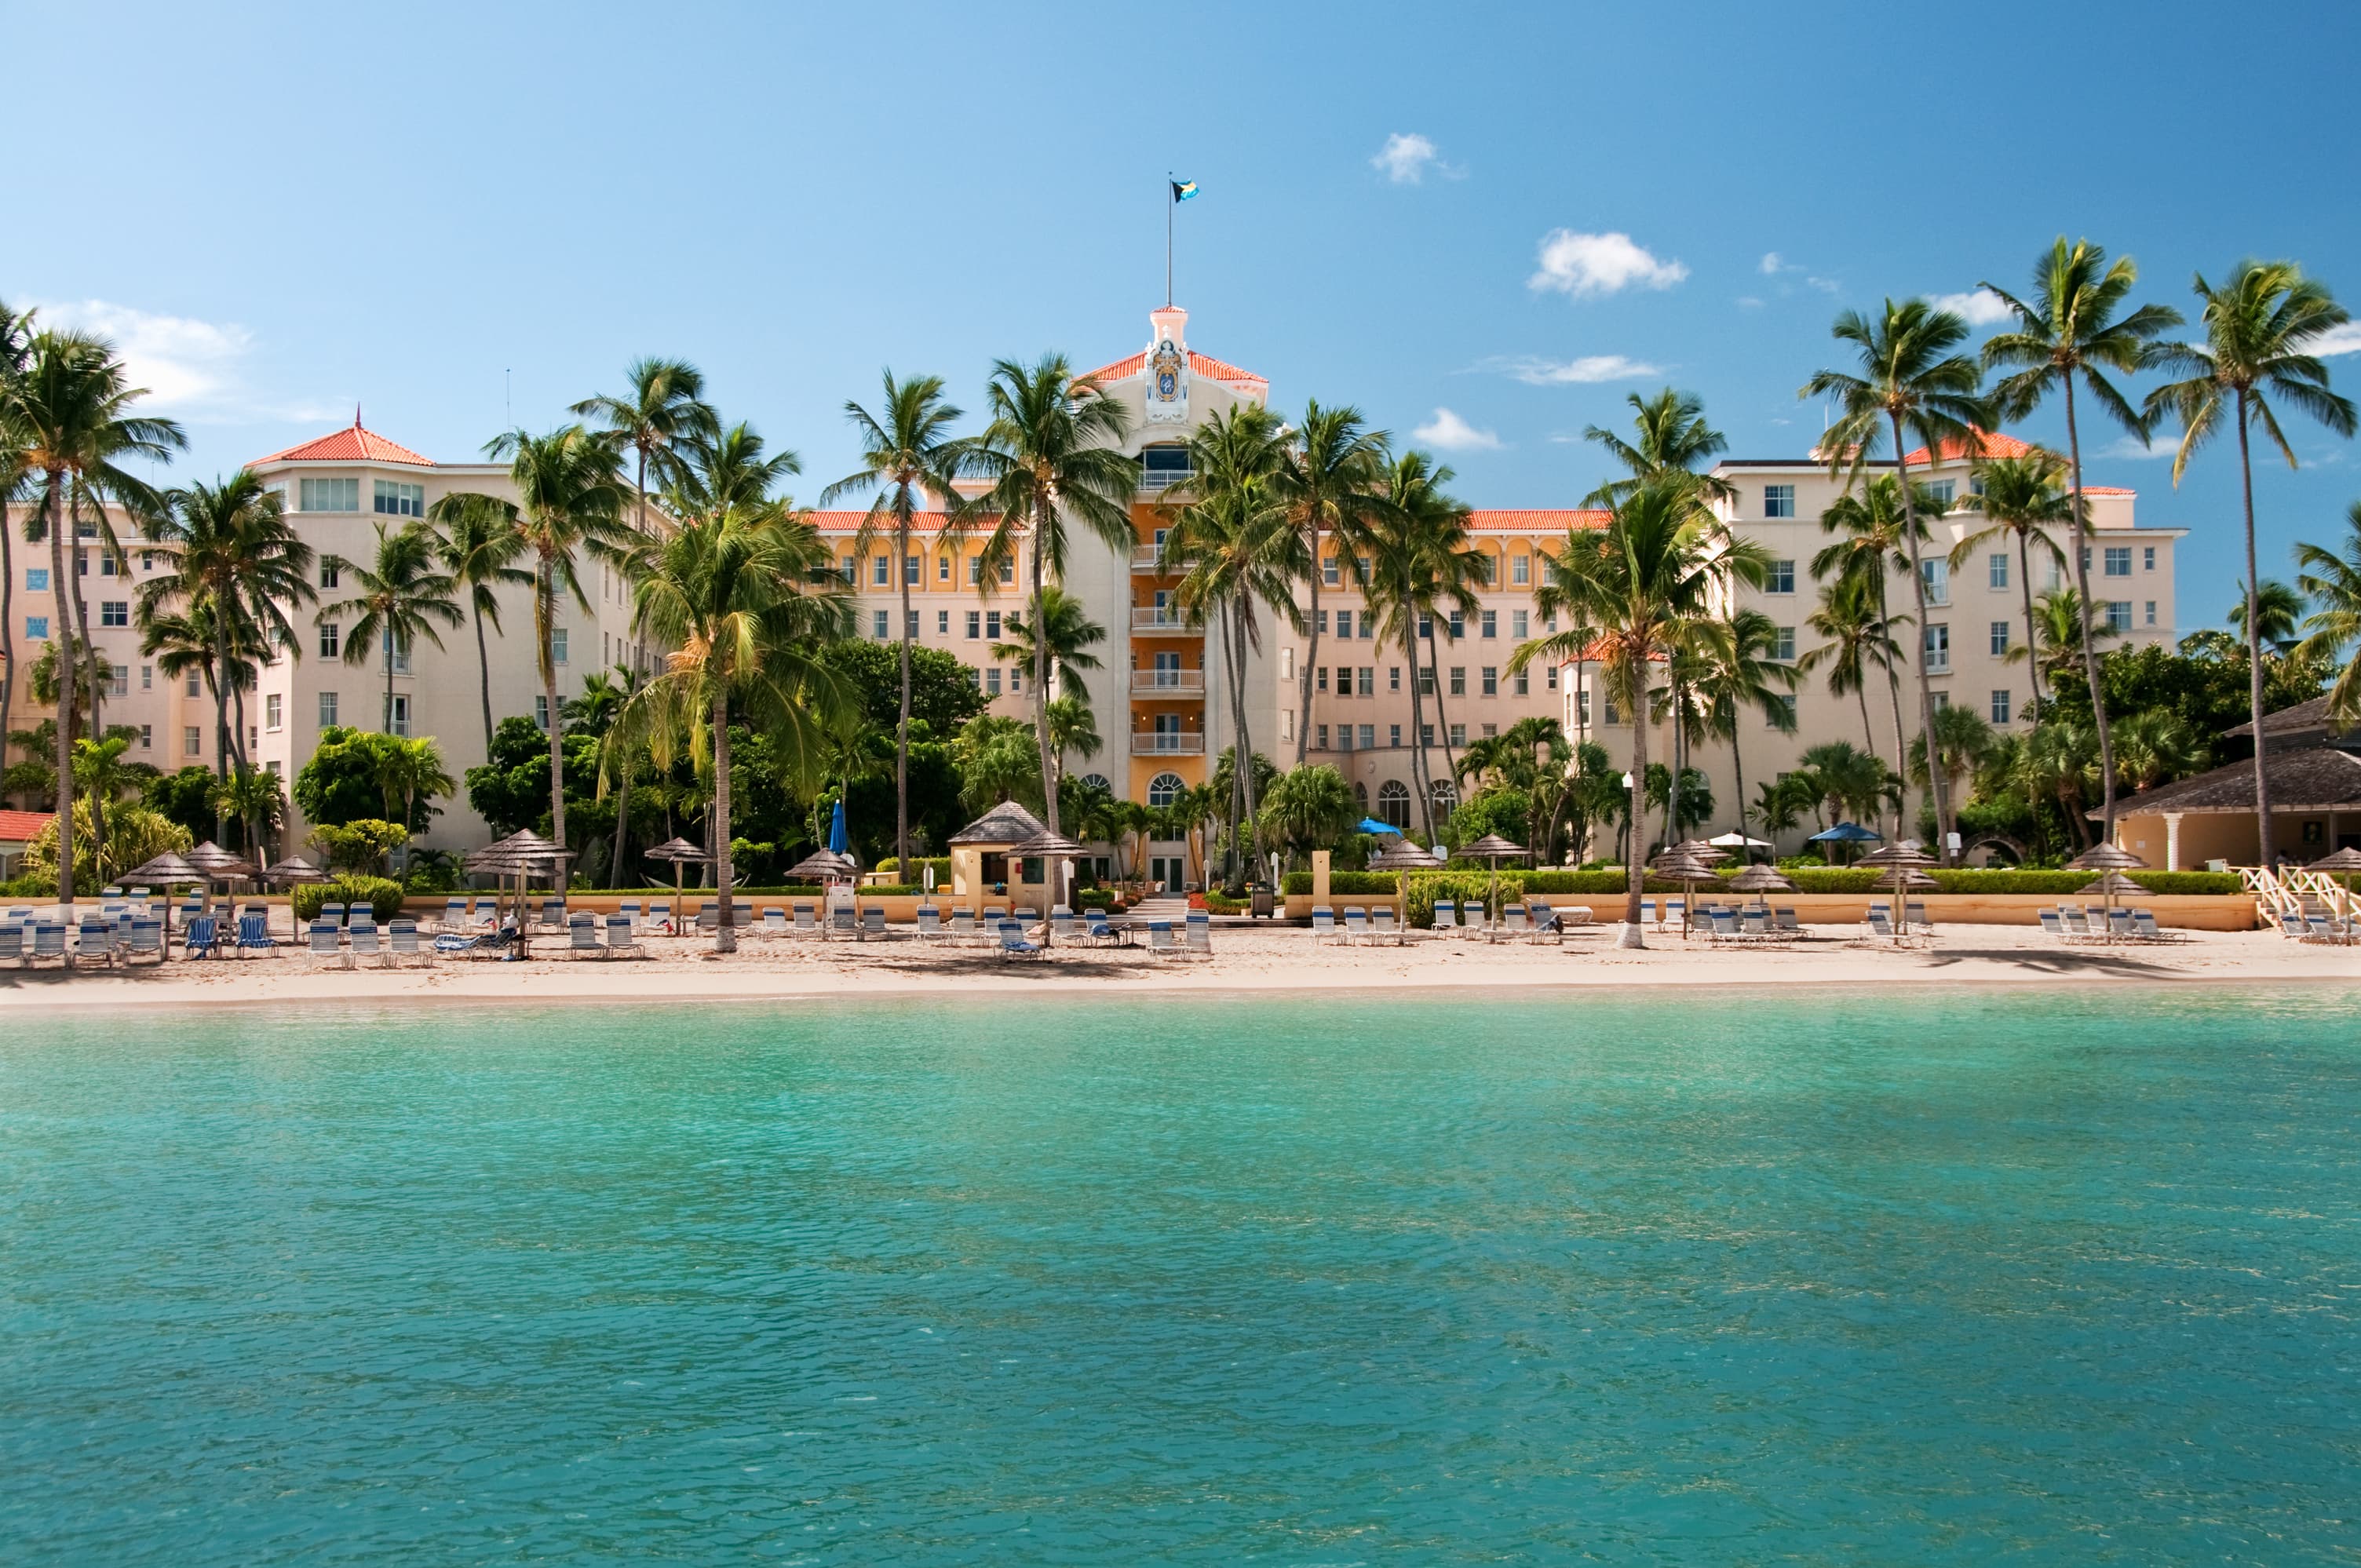 British Colonial Hilton Nassau, Bahamas